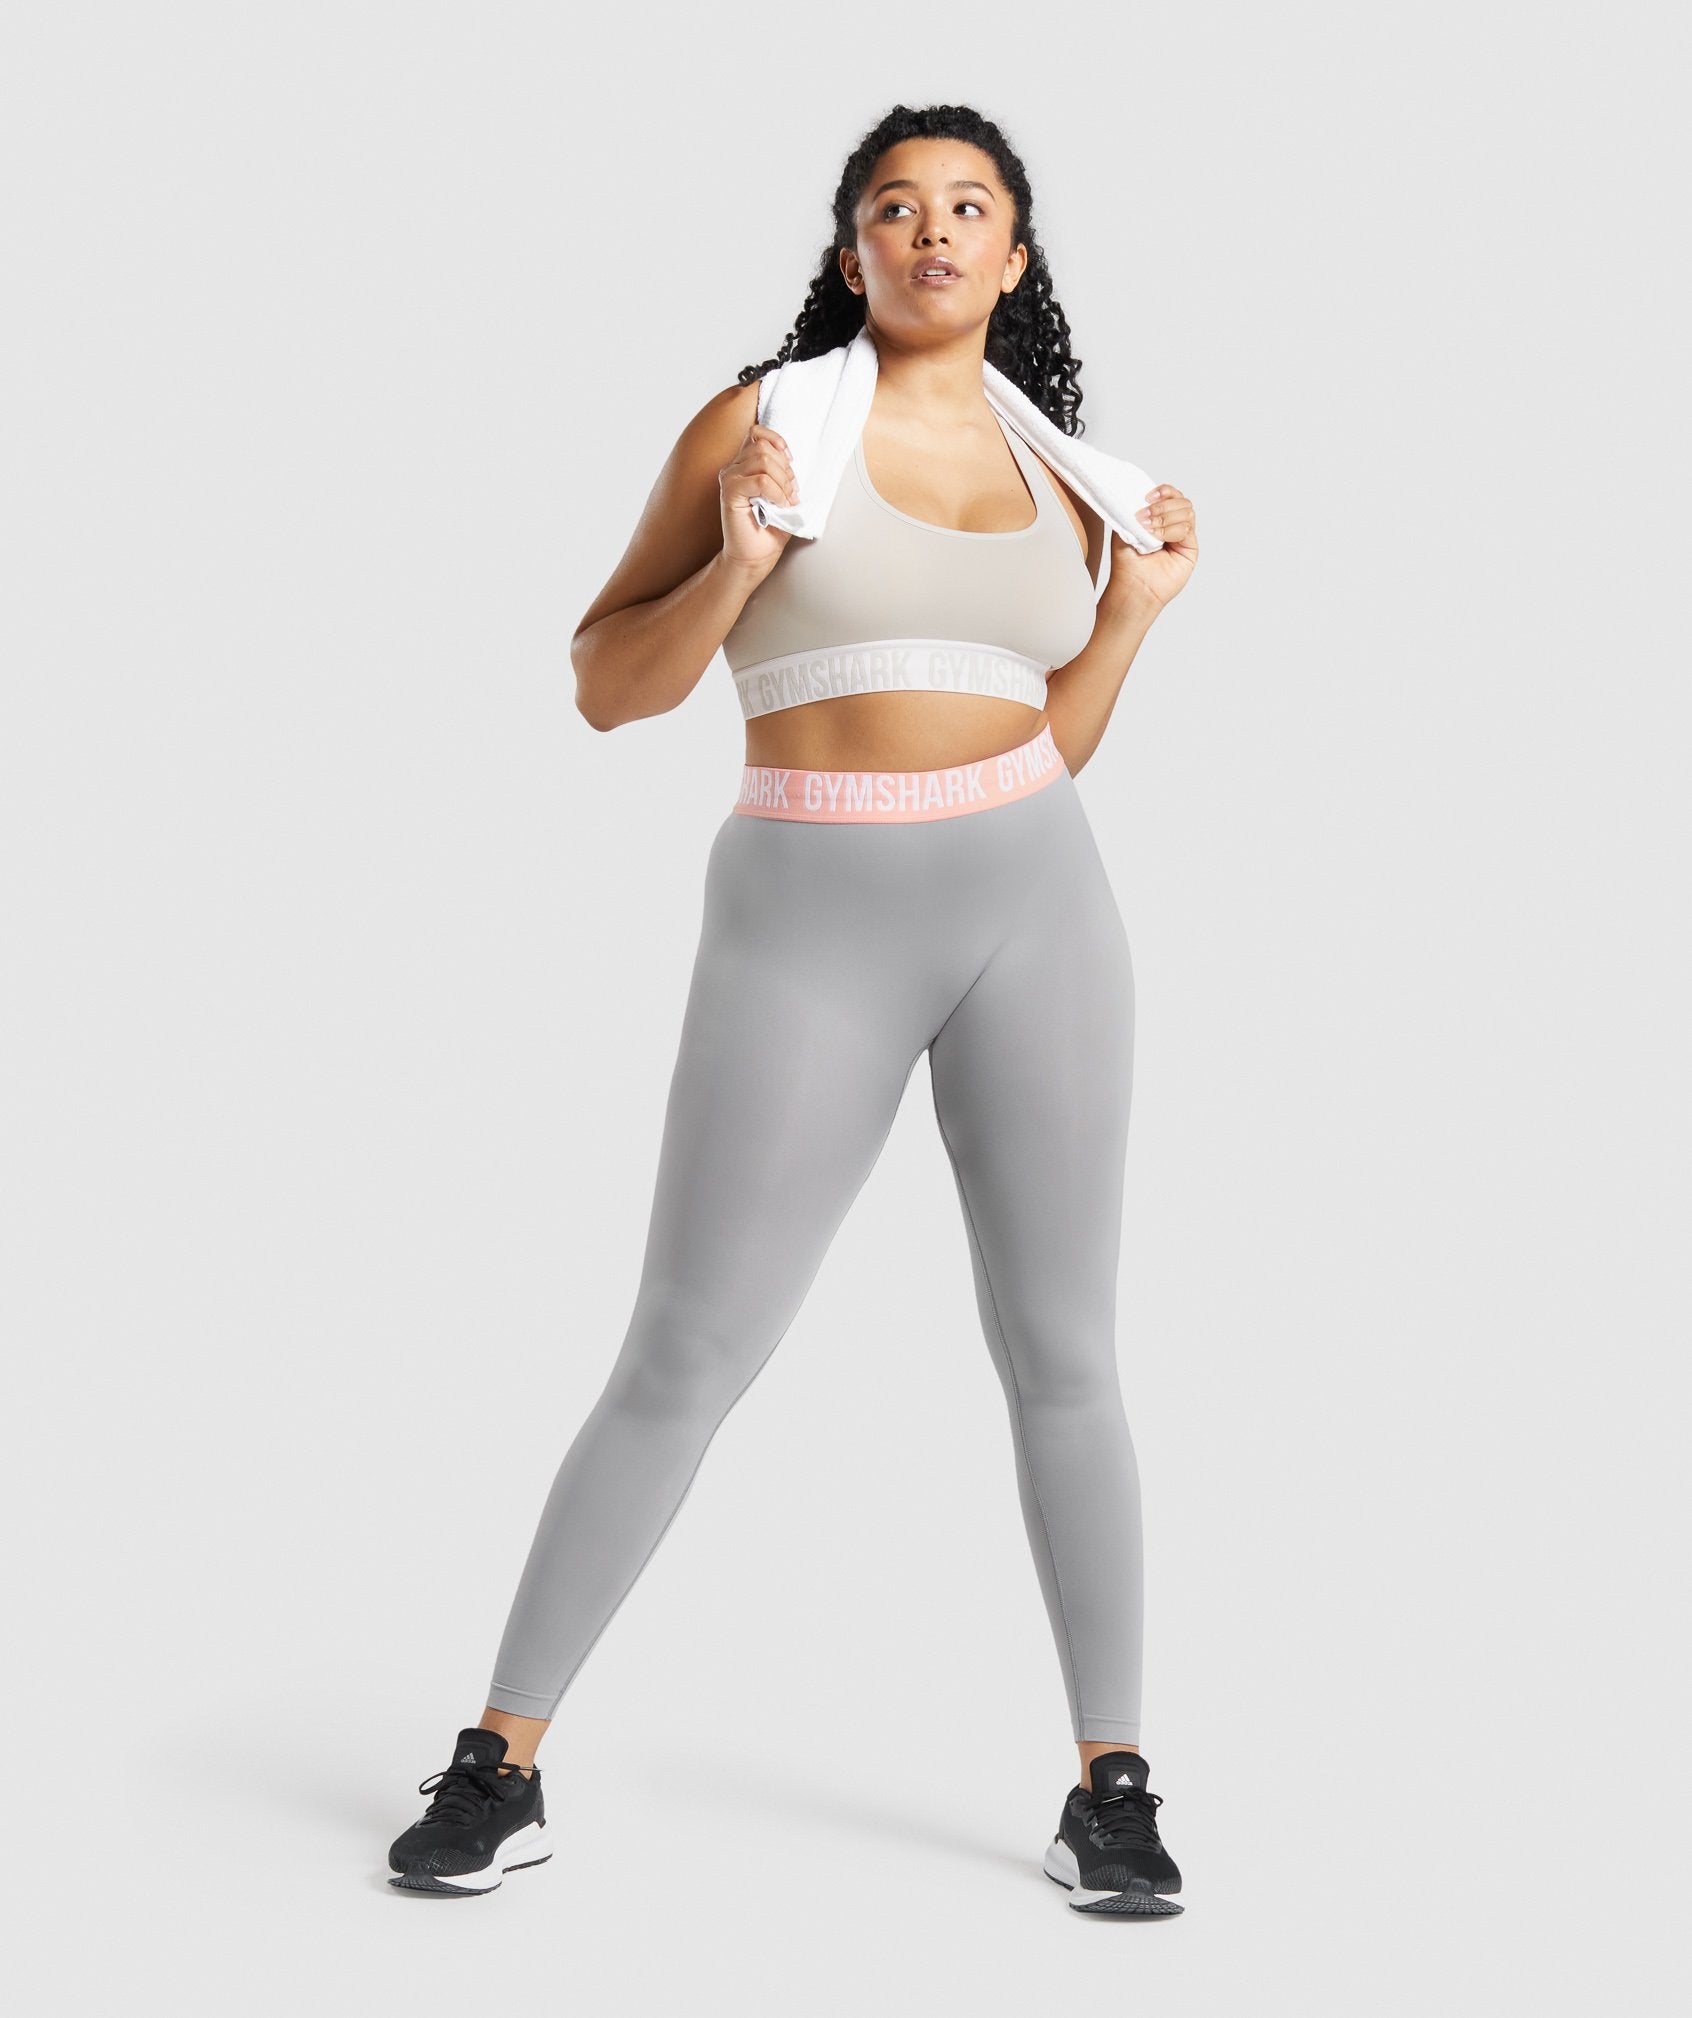 Women's Gymshark Leggings Base Layer Yoga Running Active Athletic Gray Size  XS/S | eBay